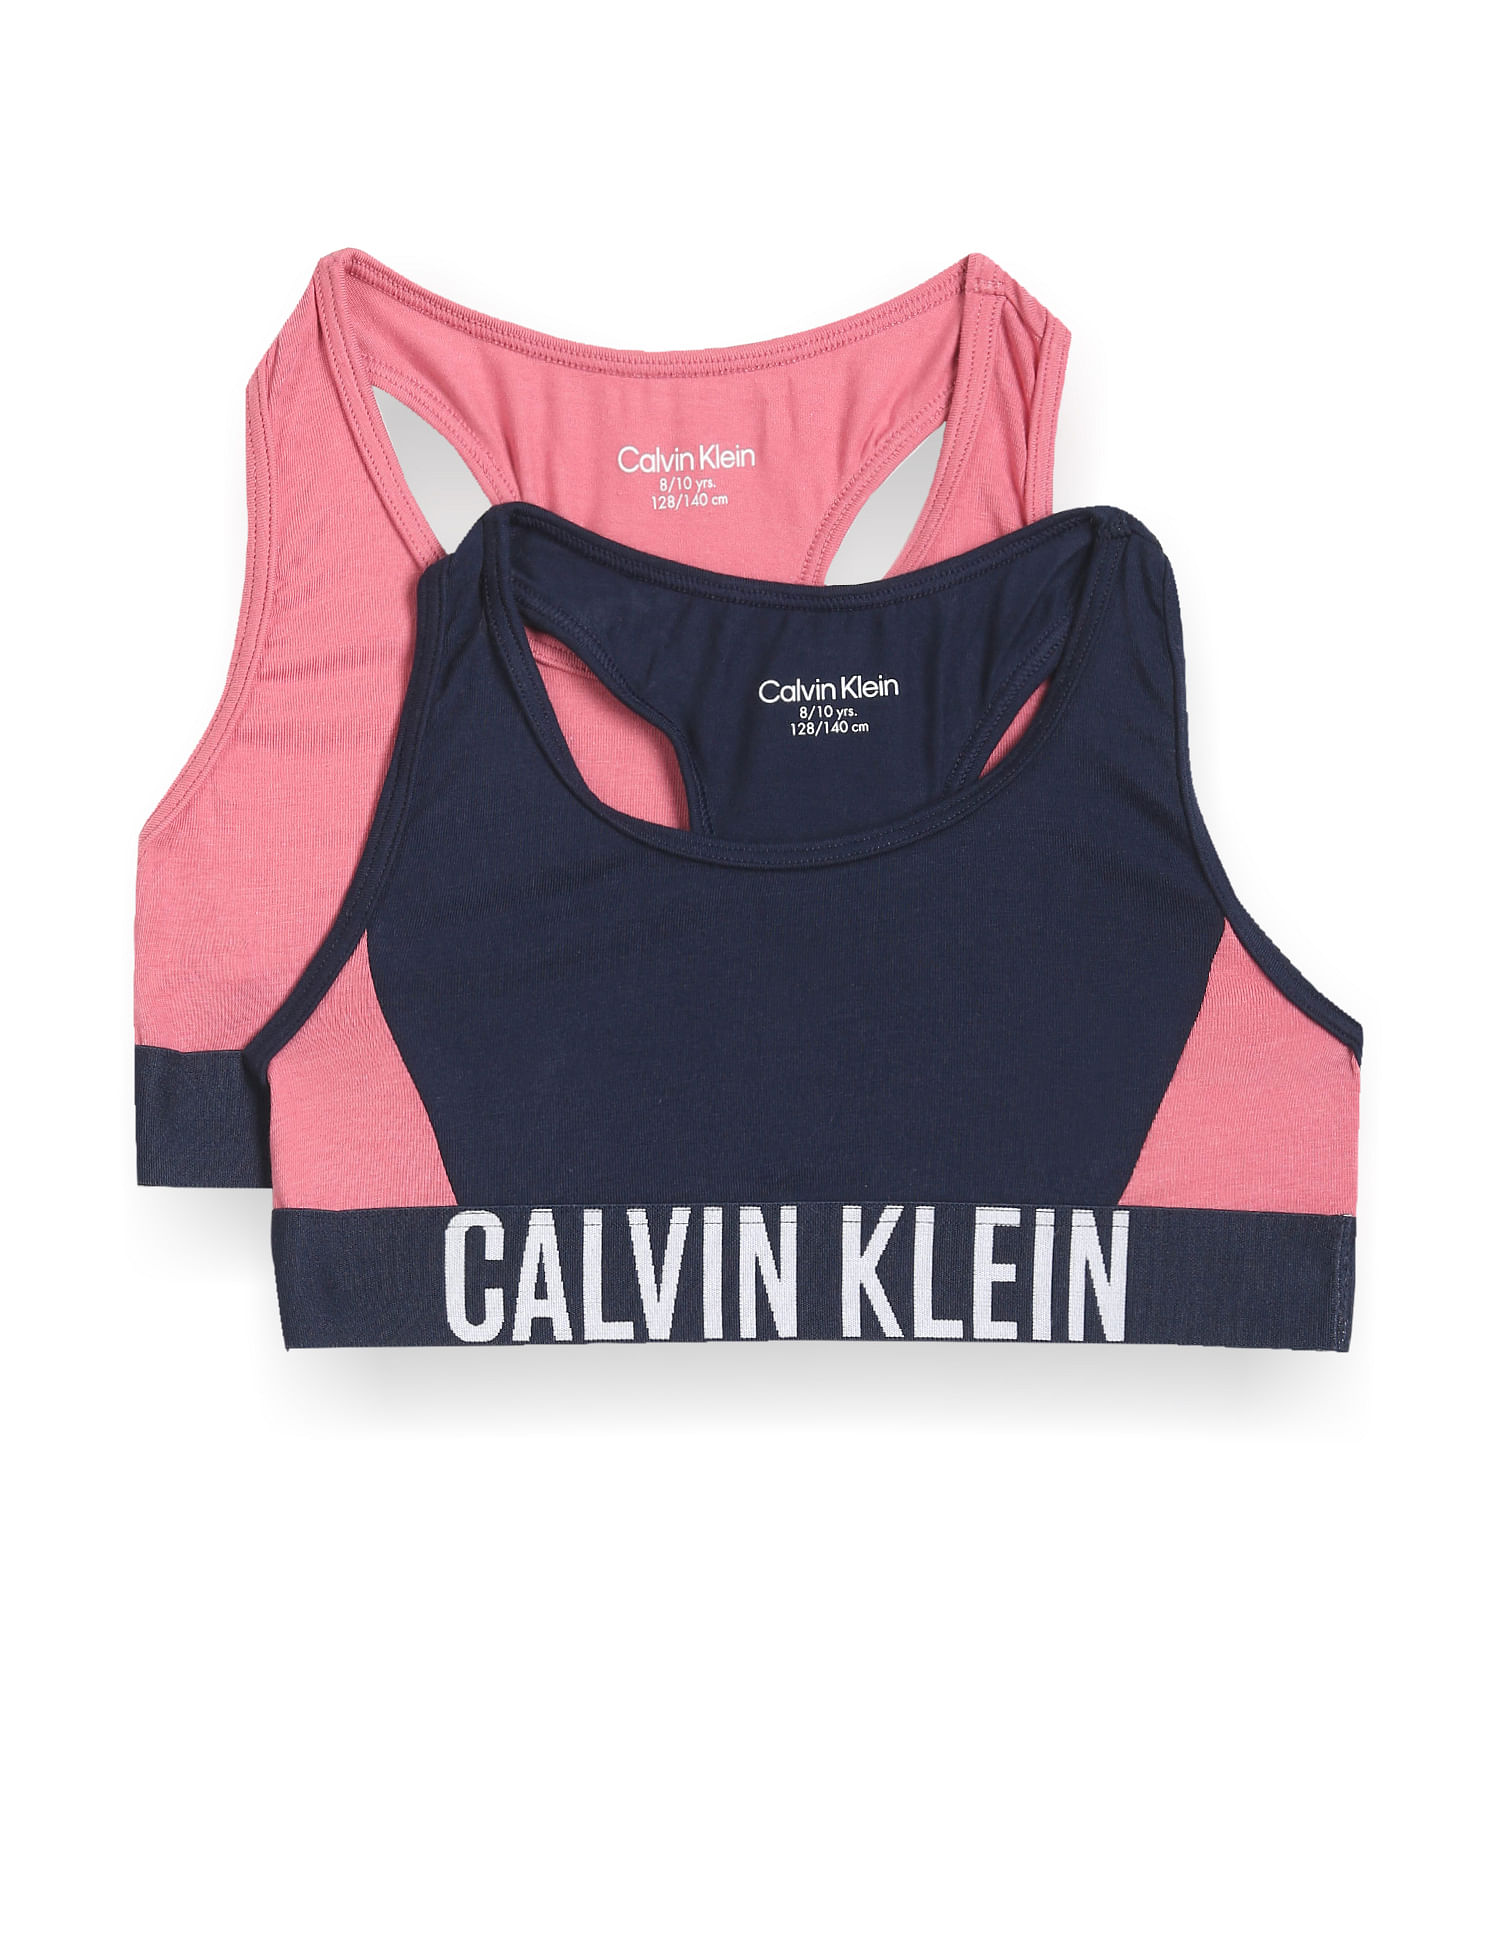 Buy Calvin Klein Underwear Girls Solid Racer Back Bralette - Pack Of 2 -  NNNOW.com